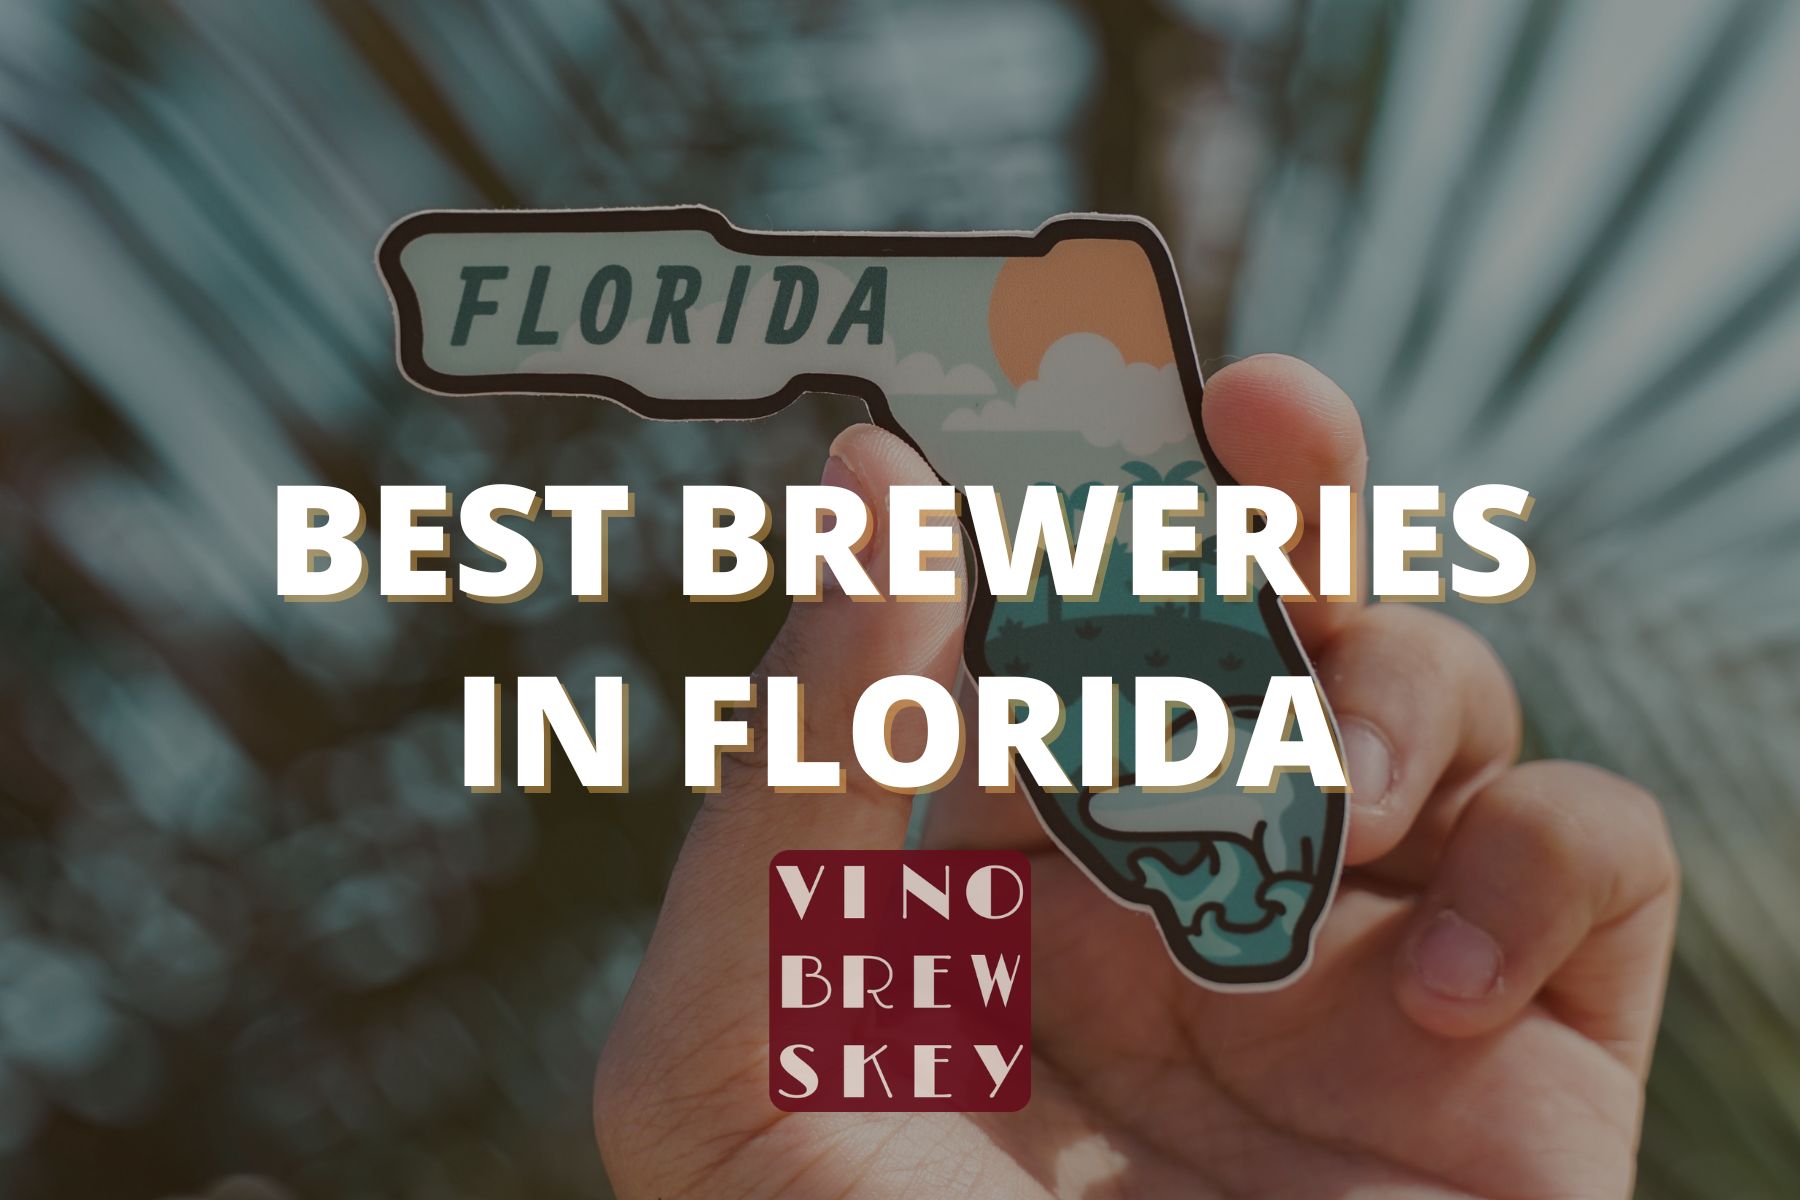 List of the Best Breweries in Florida - Vino Brewskey